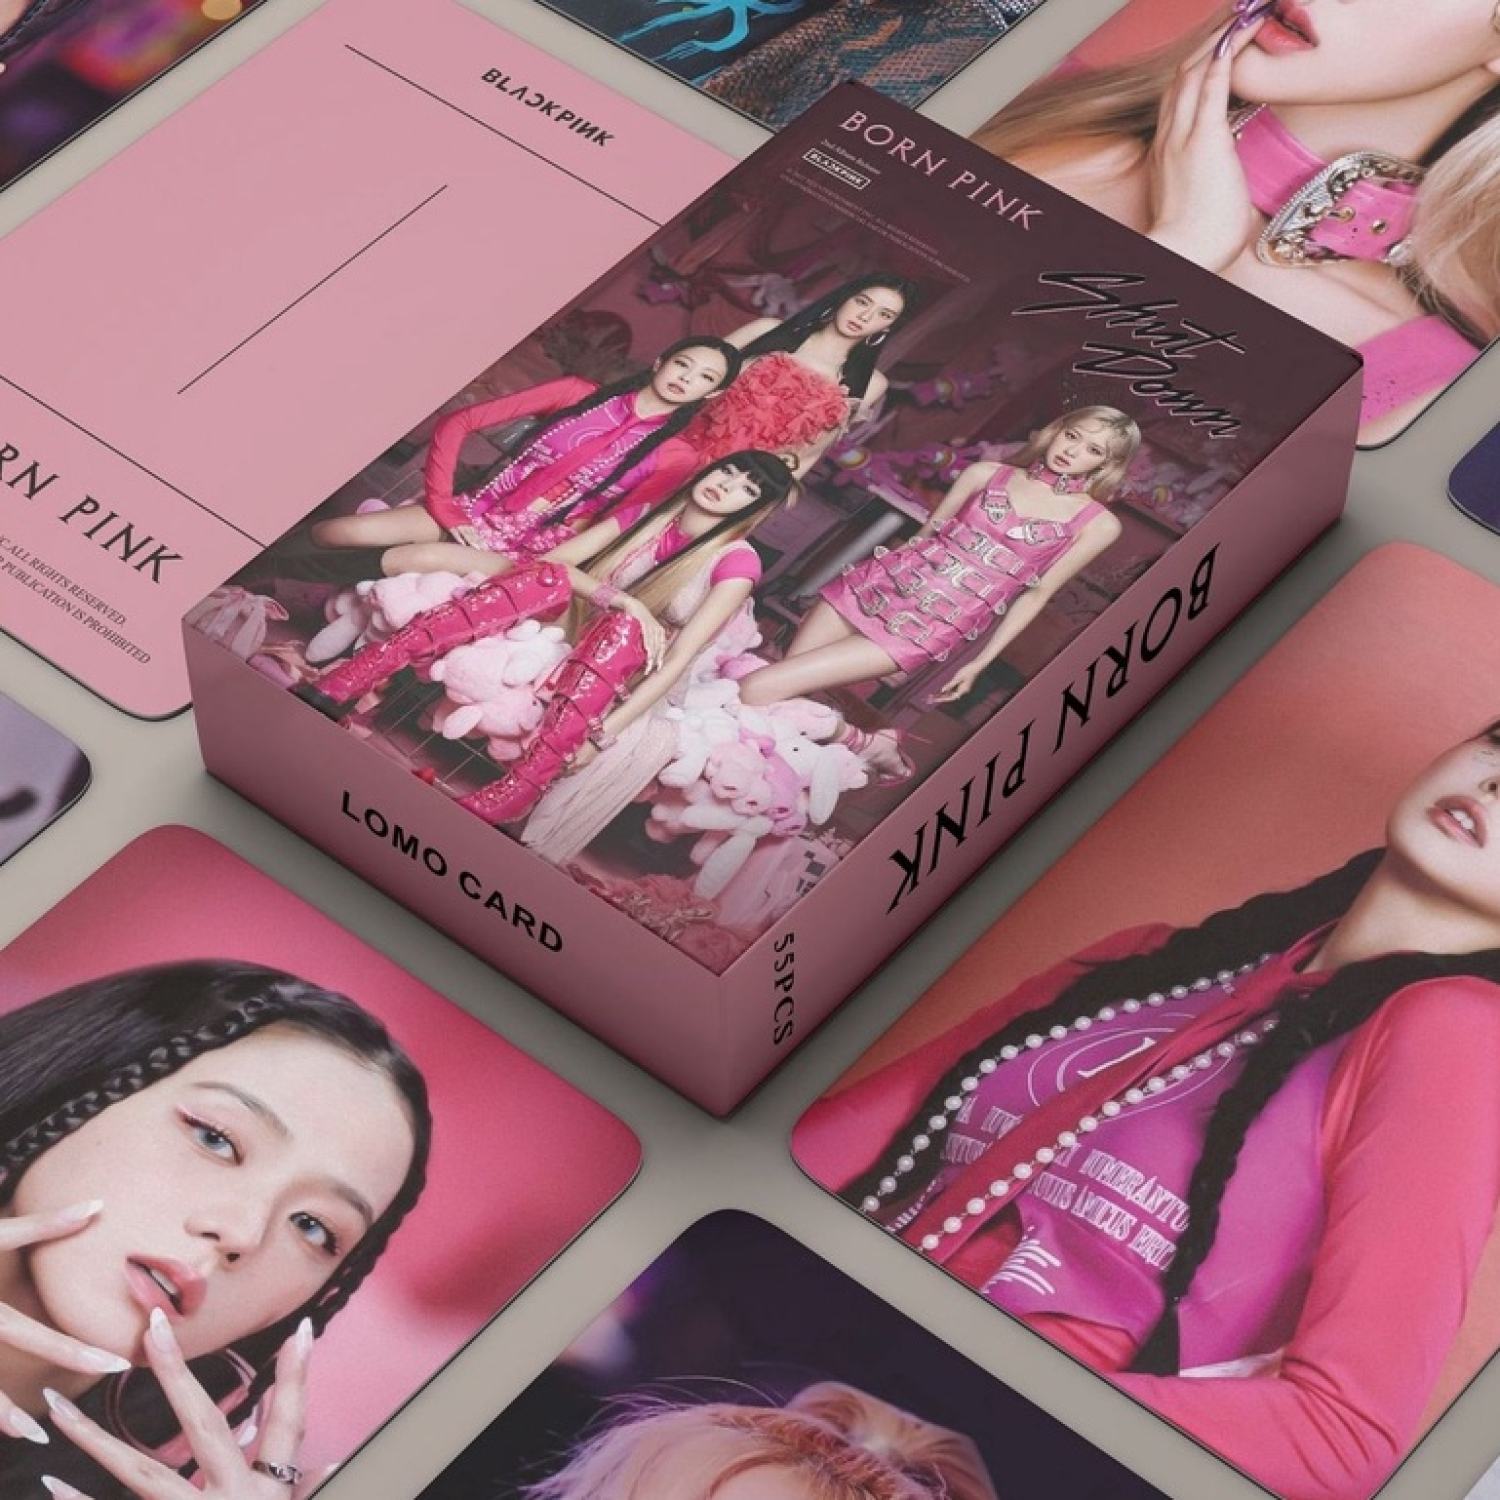 54 Lomo Card Blackpink Born Pink kpop Lisa, Jennie, Jisoo